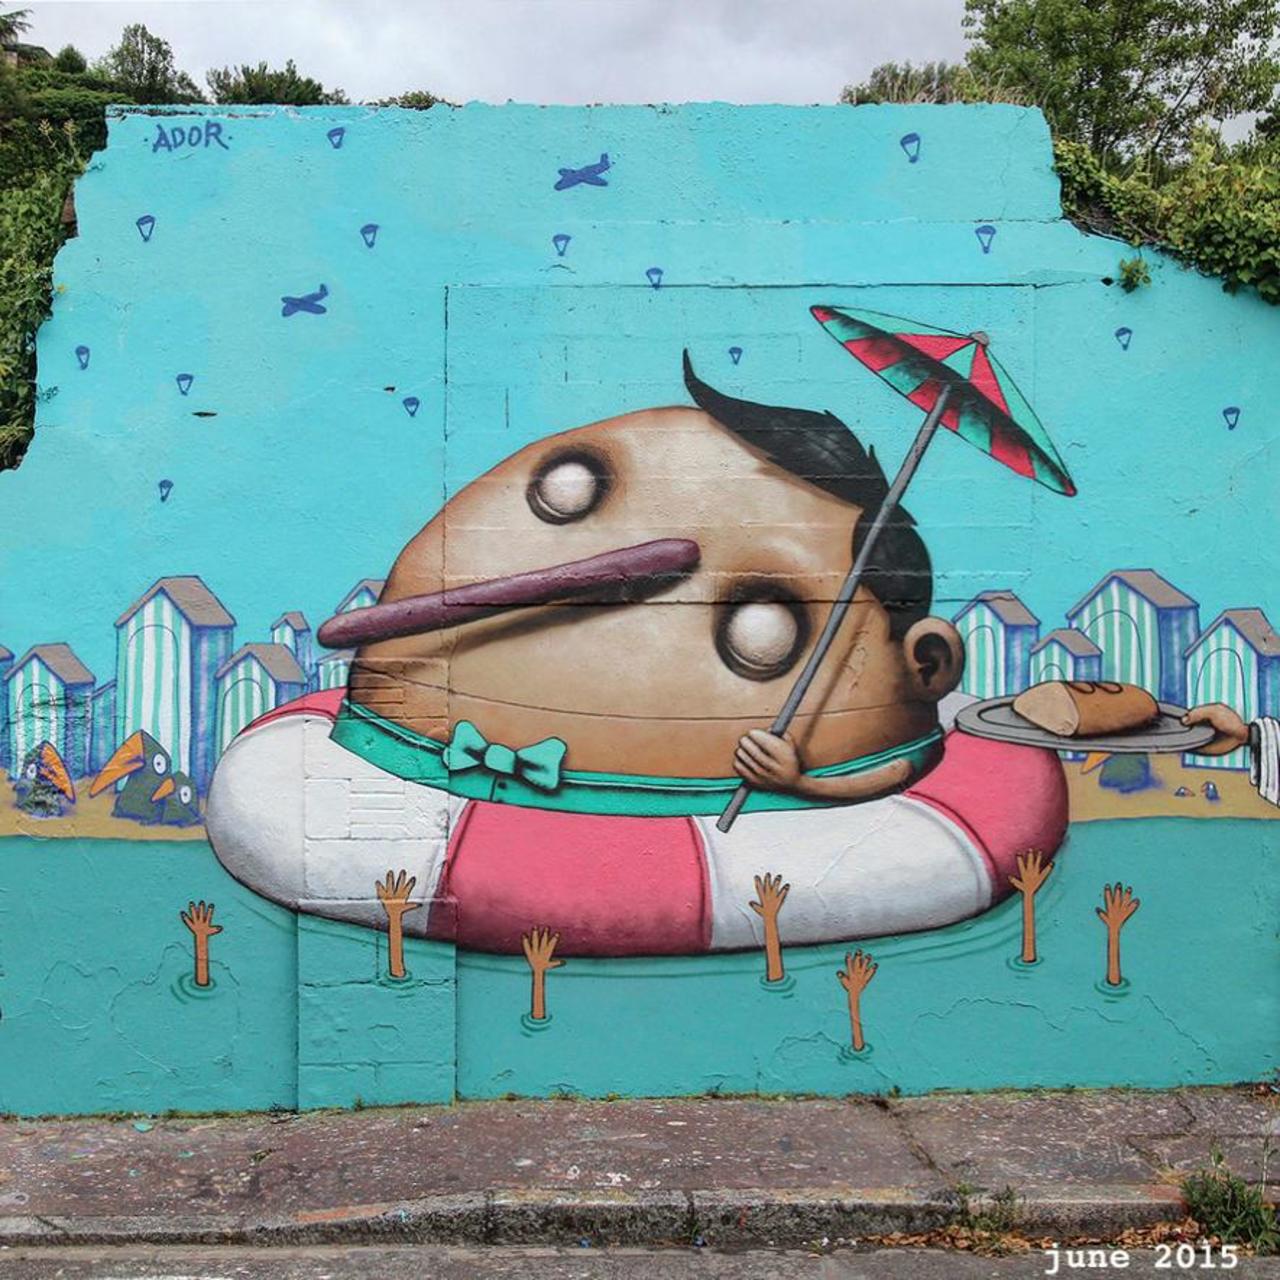 RT @StreetArt_Graf: "Summer" by Ador in France (http://globalstreetart.com/ador)
Via @globalstreetart 
#streetart #urbanart #mural #art #graffiti http://t.co/KPp5PENNZD